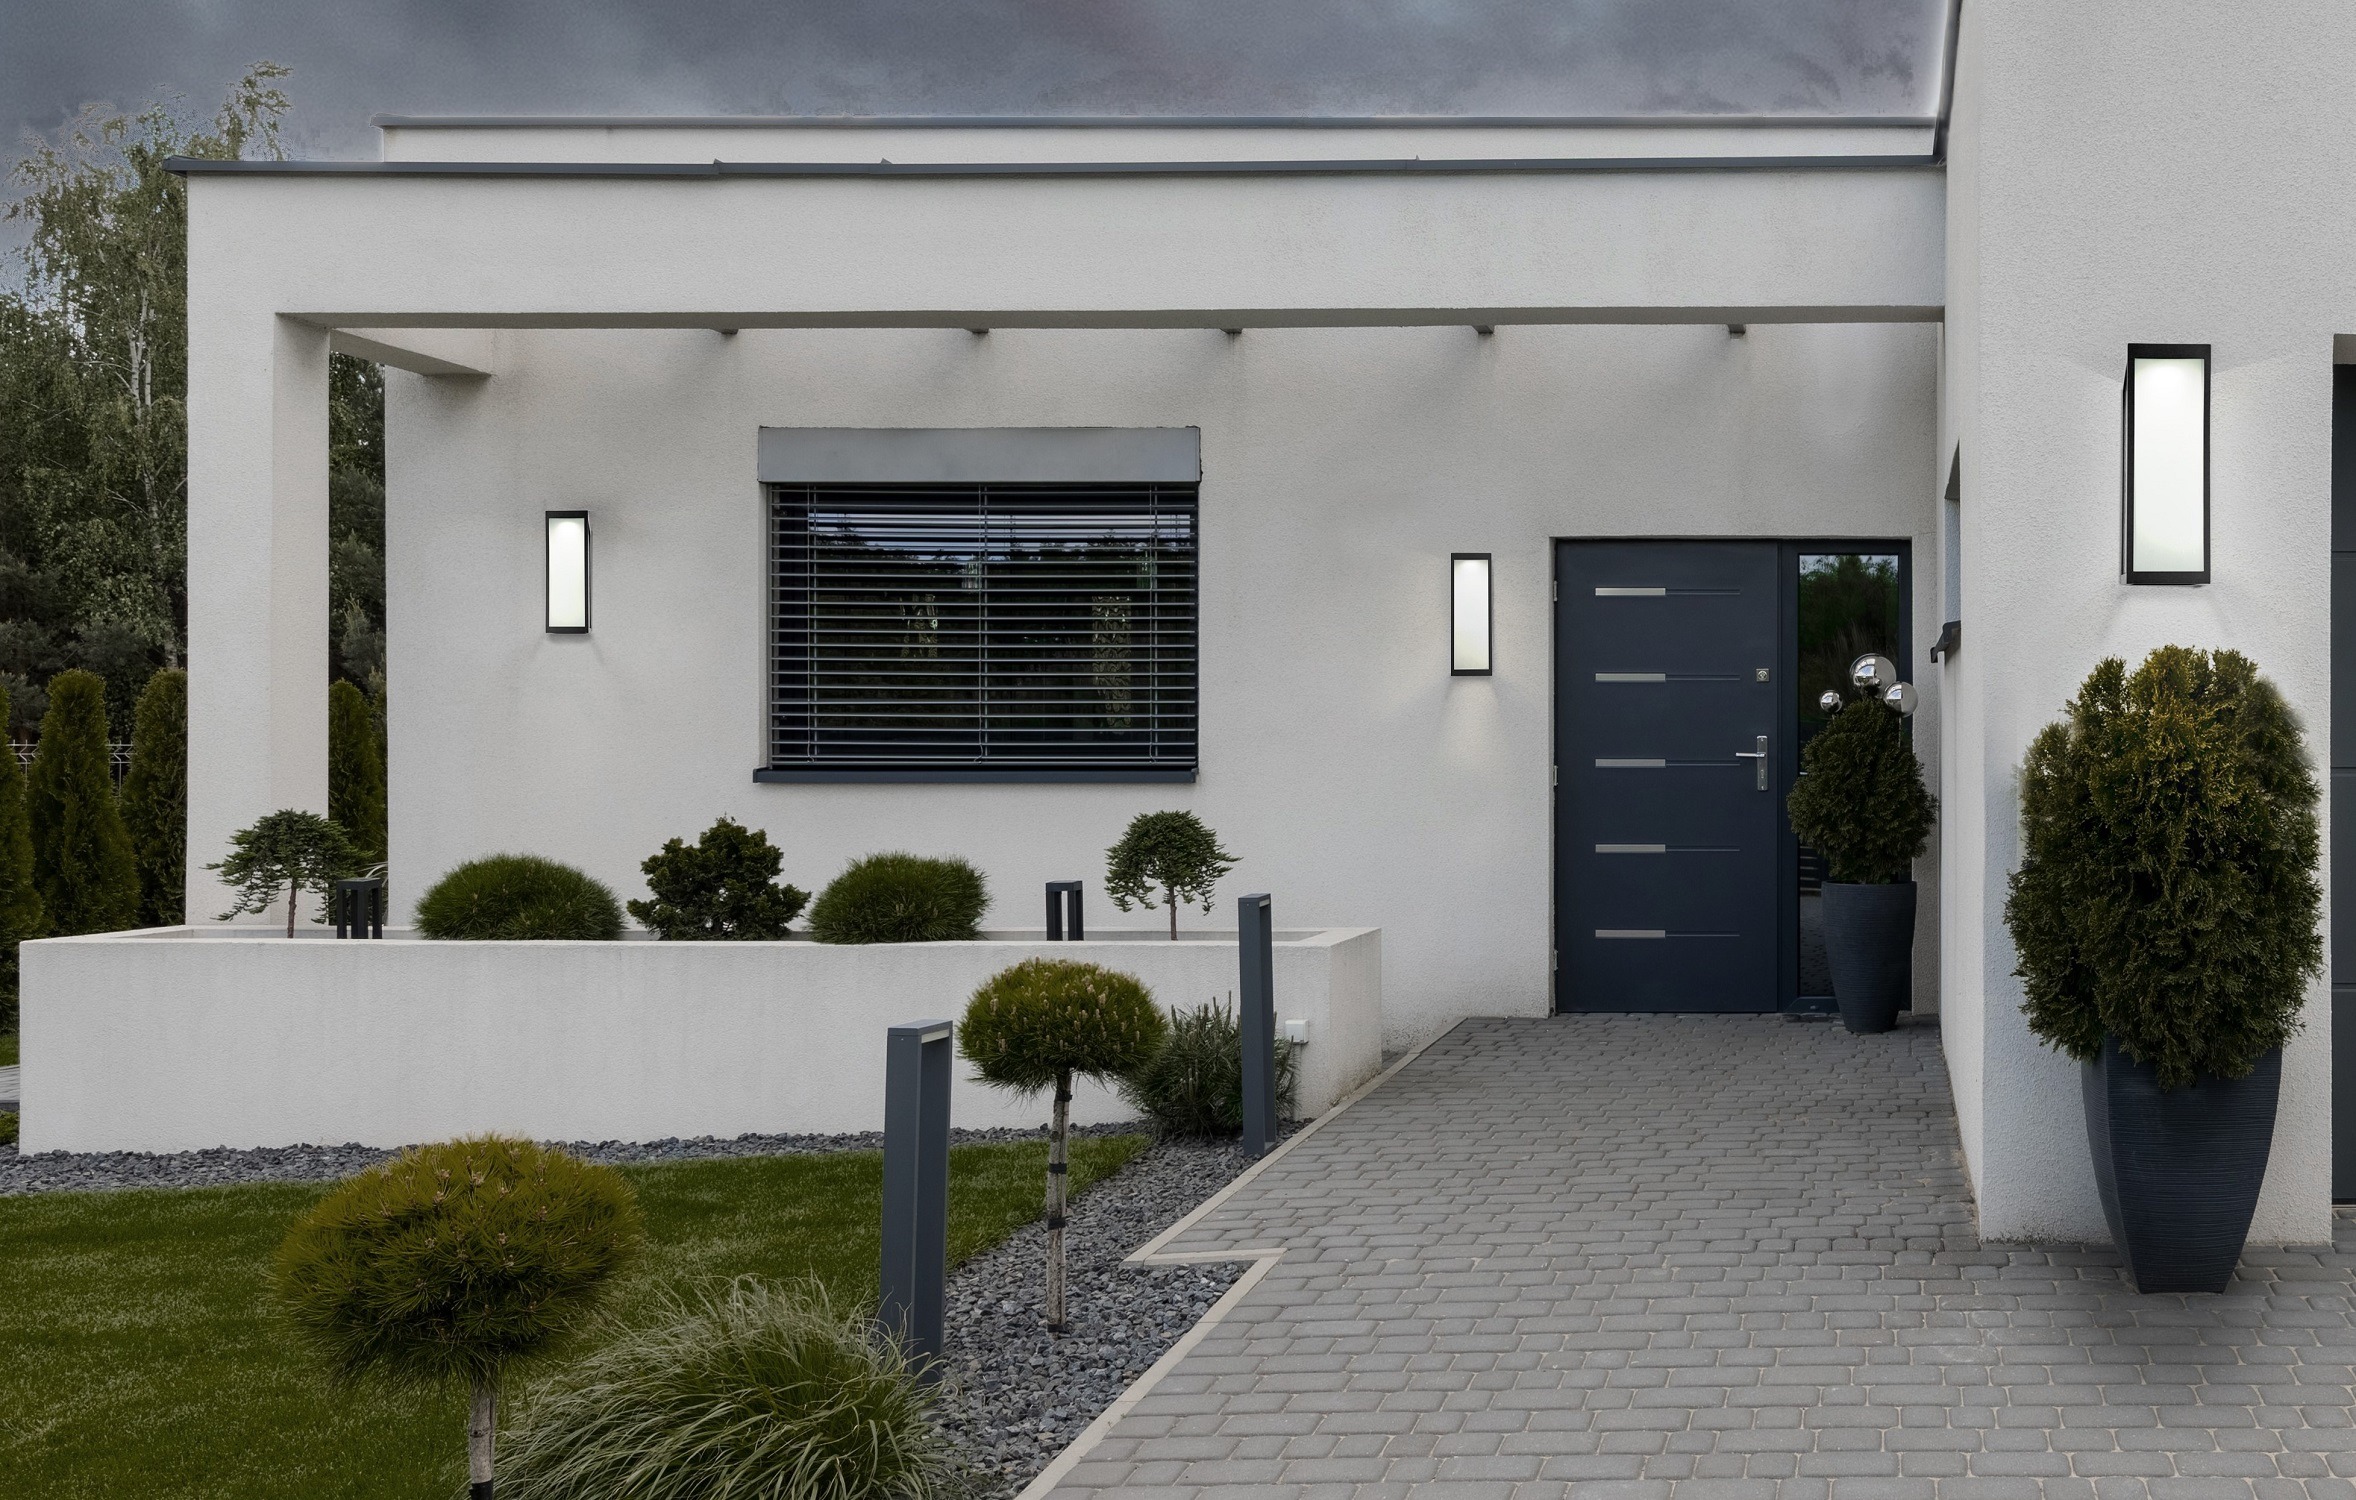 Dark Sky Compliant outdoor lighting illuminates the exterior of a modern white home.